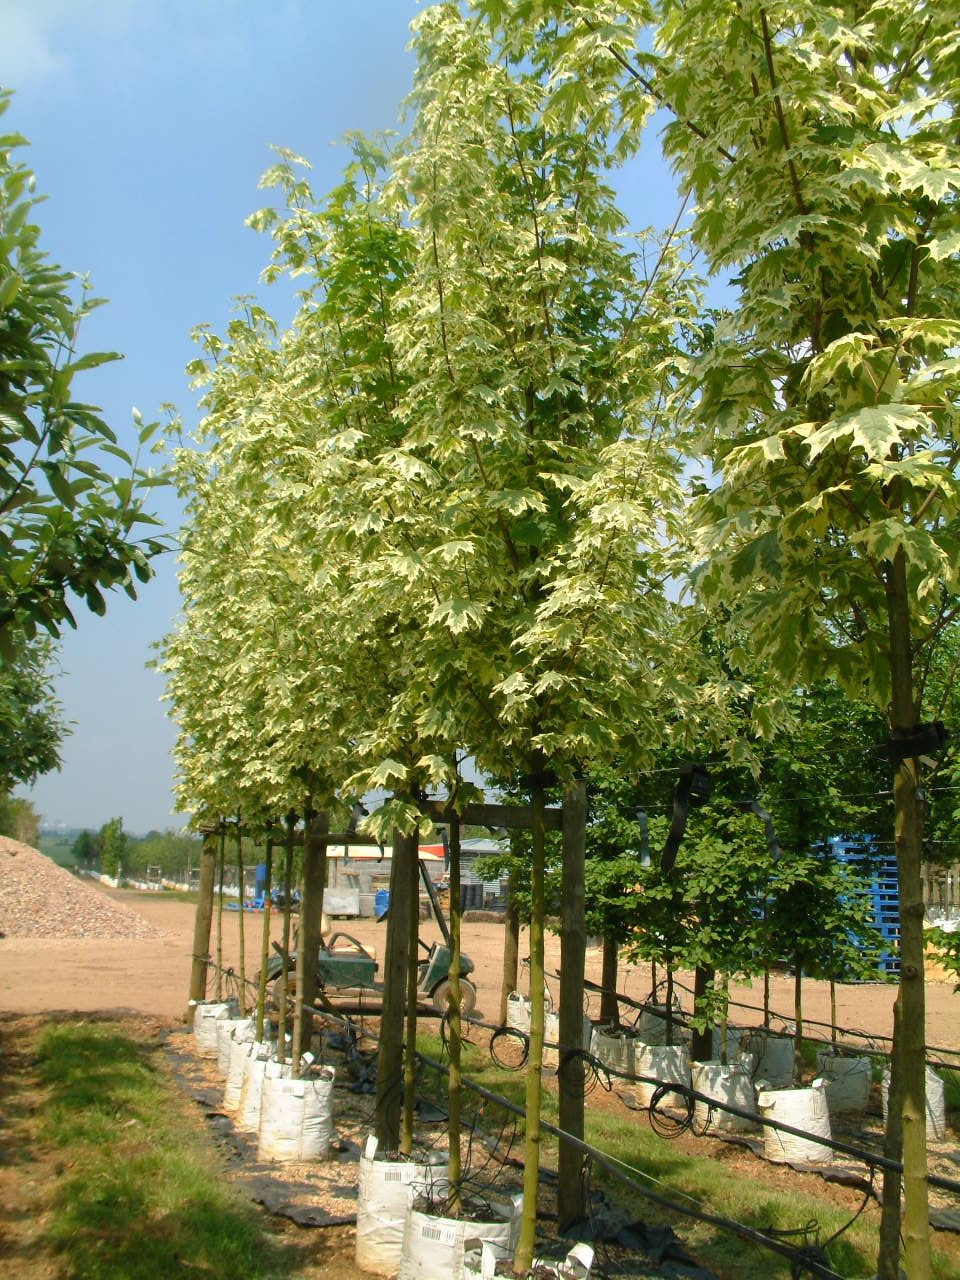 Acer platanoides Drummondii